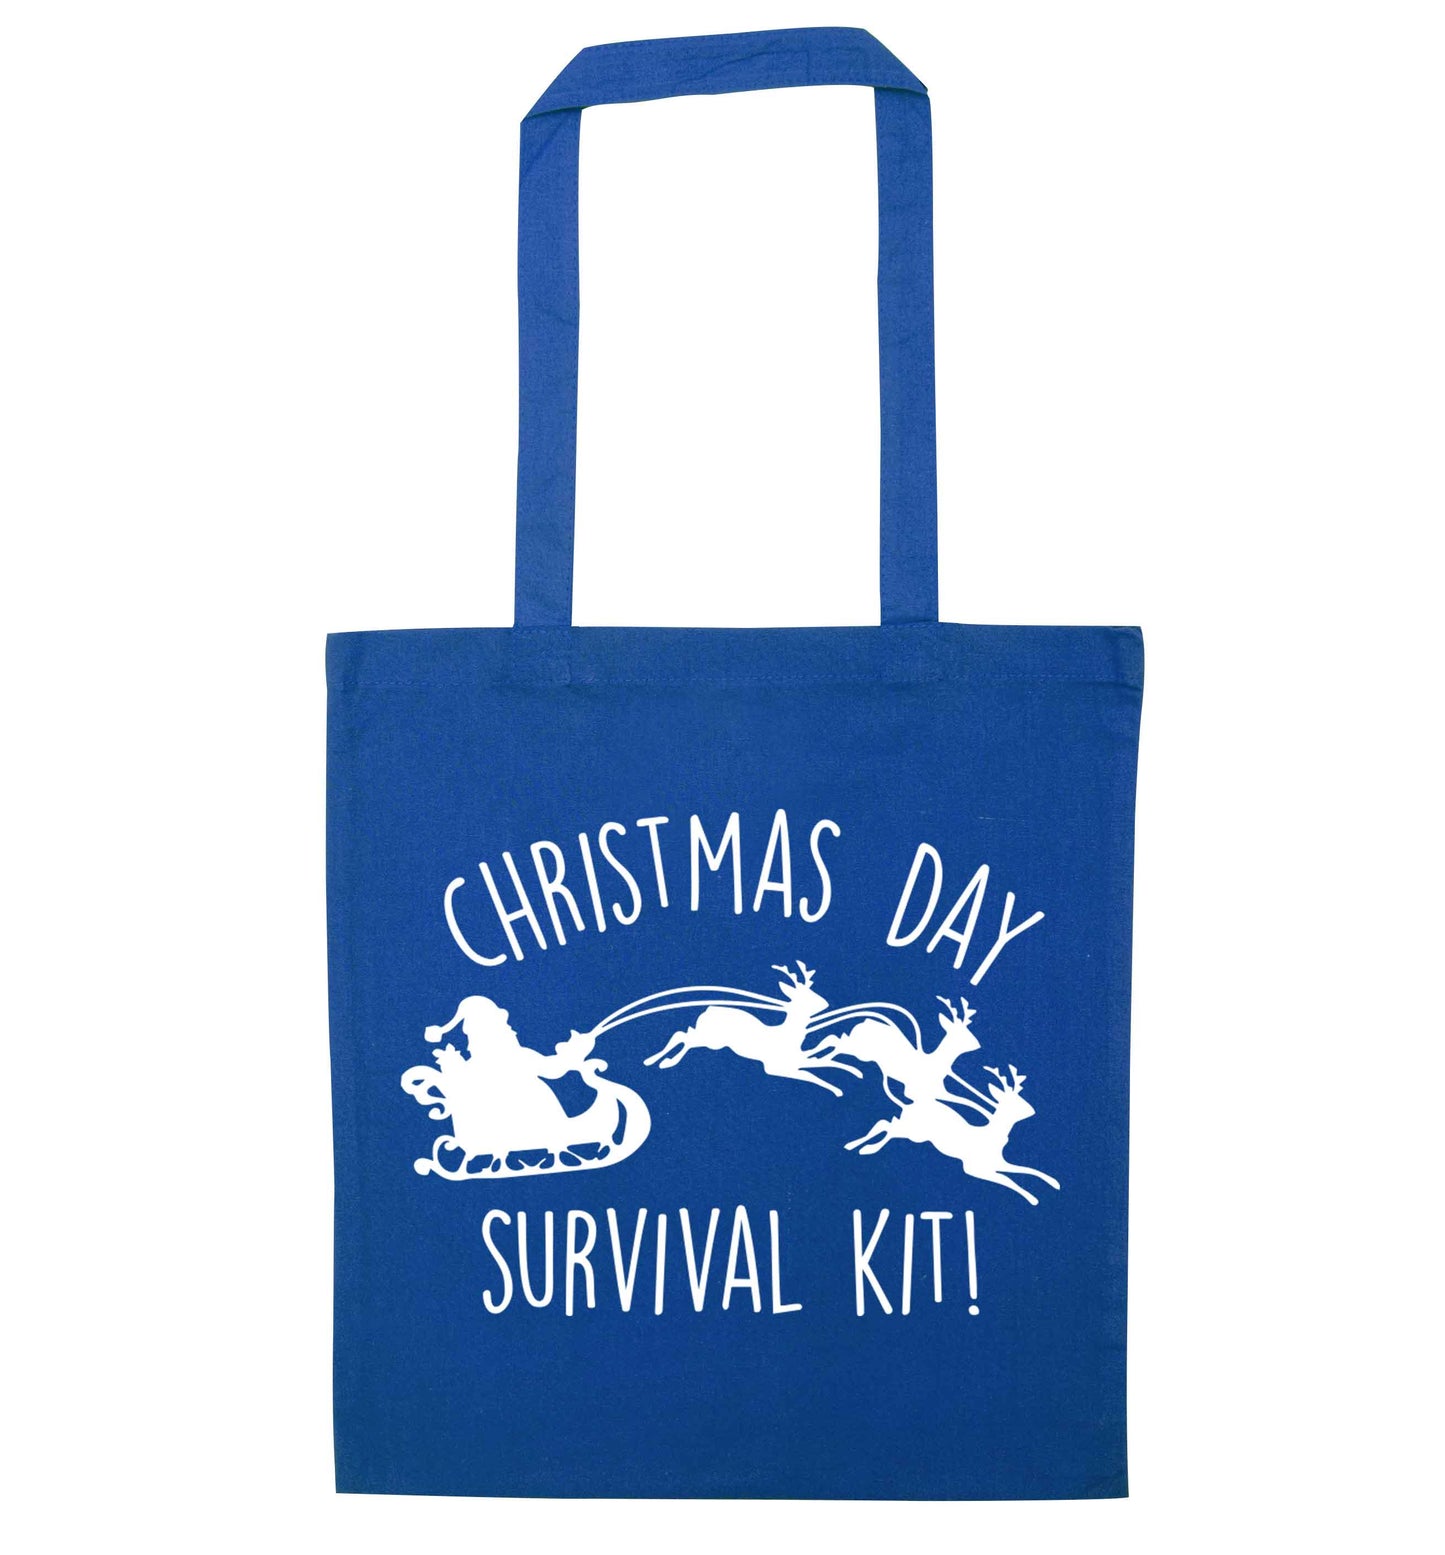 Christmas Day Survival Kitblue tote bag